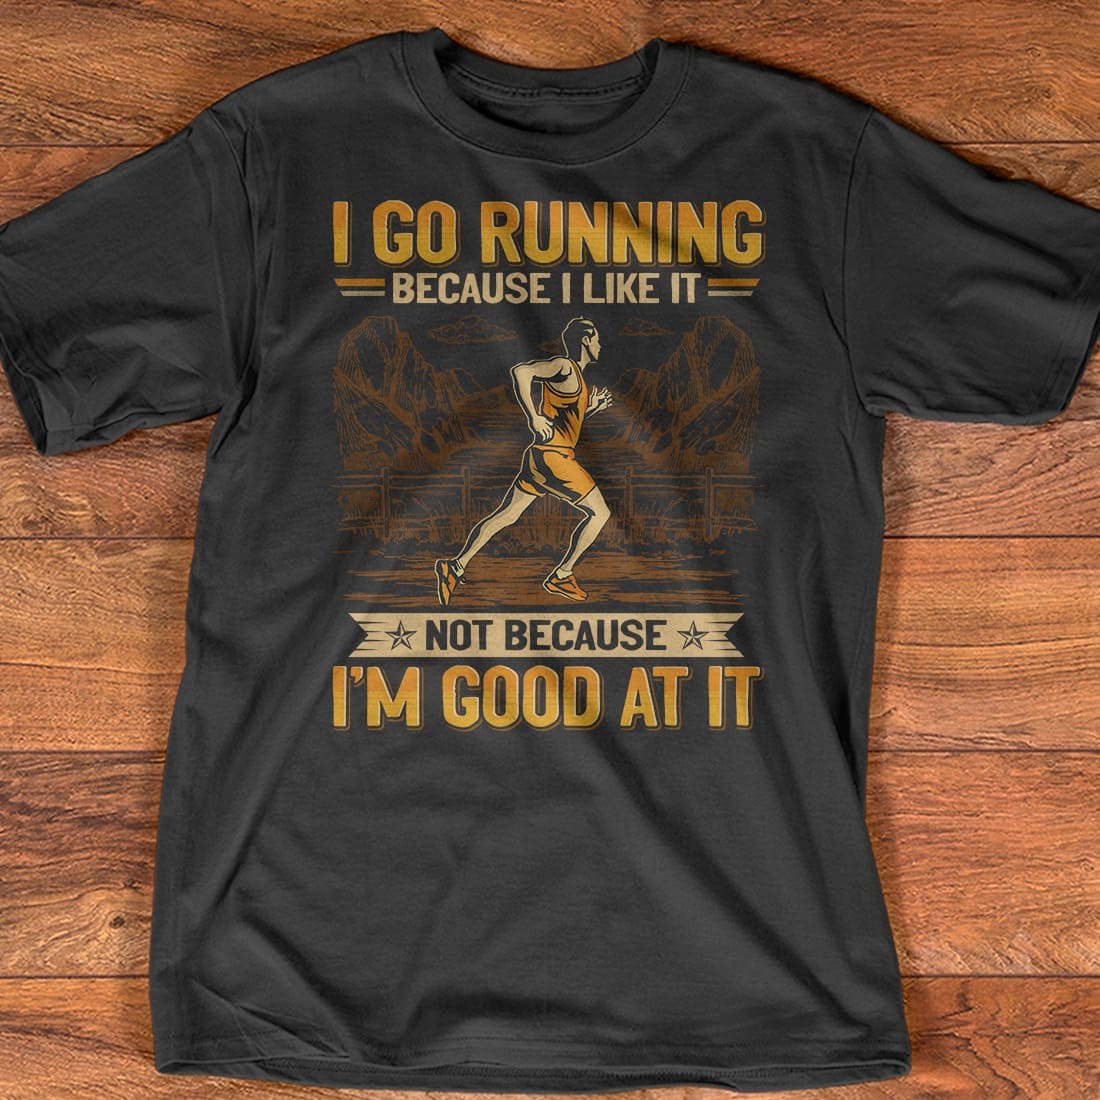 I go running because I like it not because I'm good at it - Gift for runner, man go running